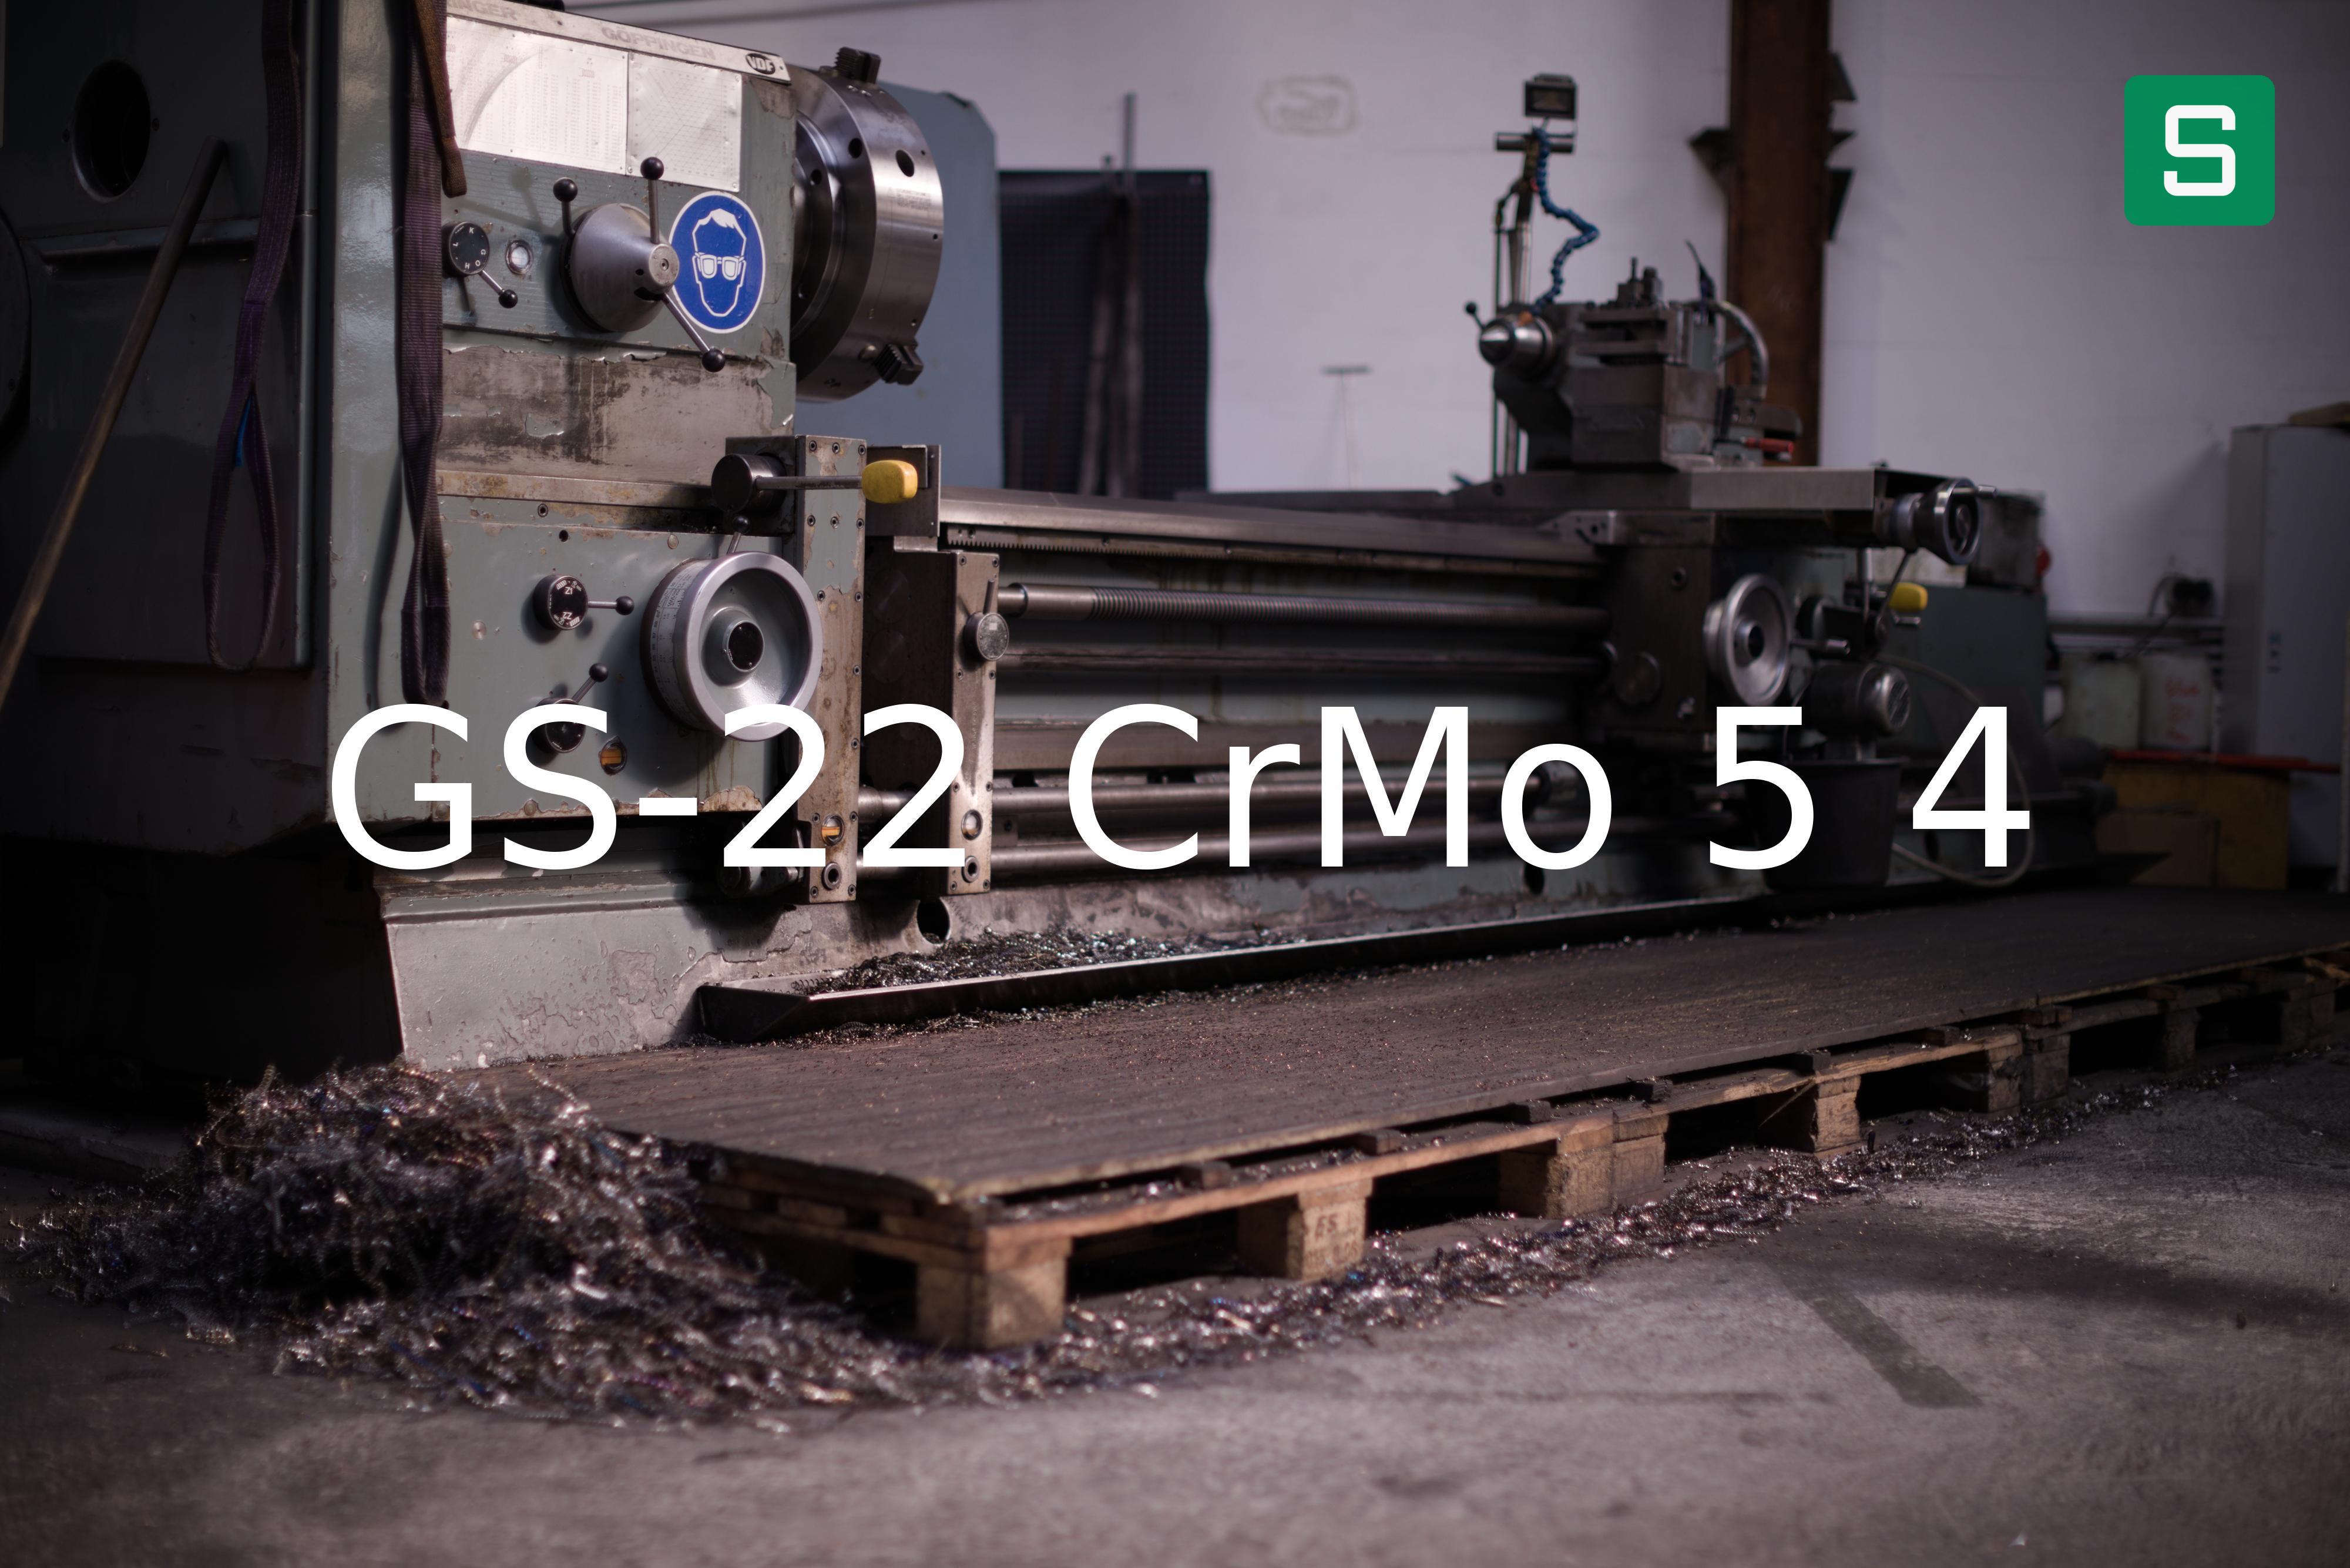 Steel Material: GS-22 CrMo 5 4